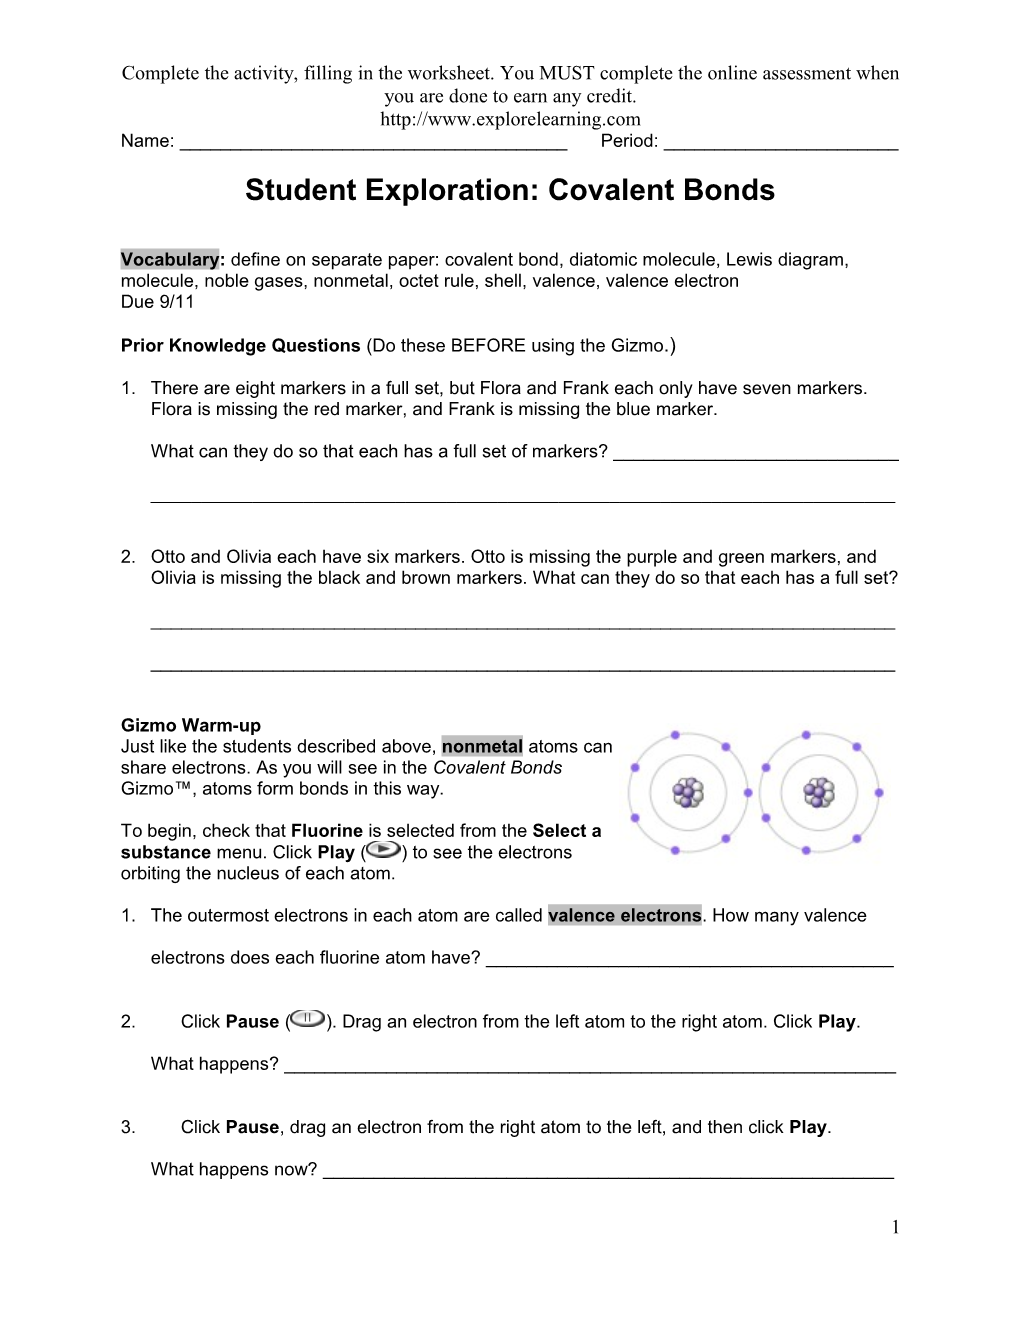 Student Exploration Sheet: Growing Plants s12